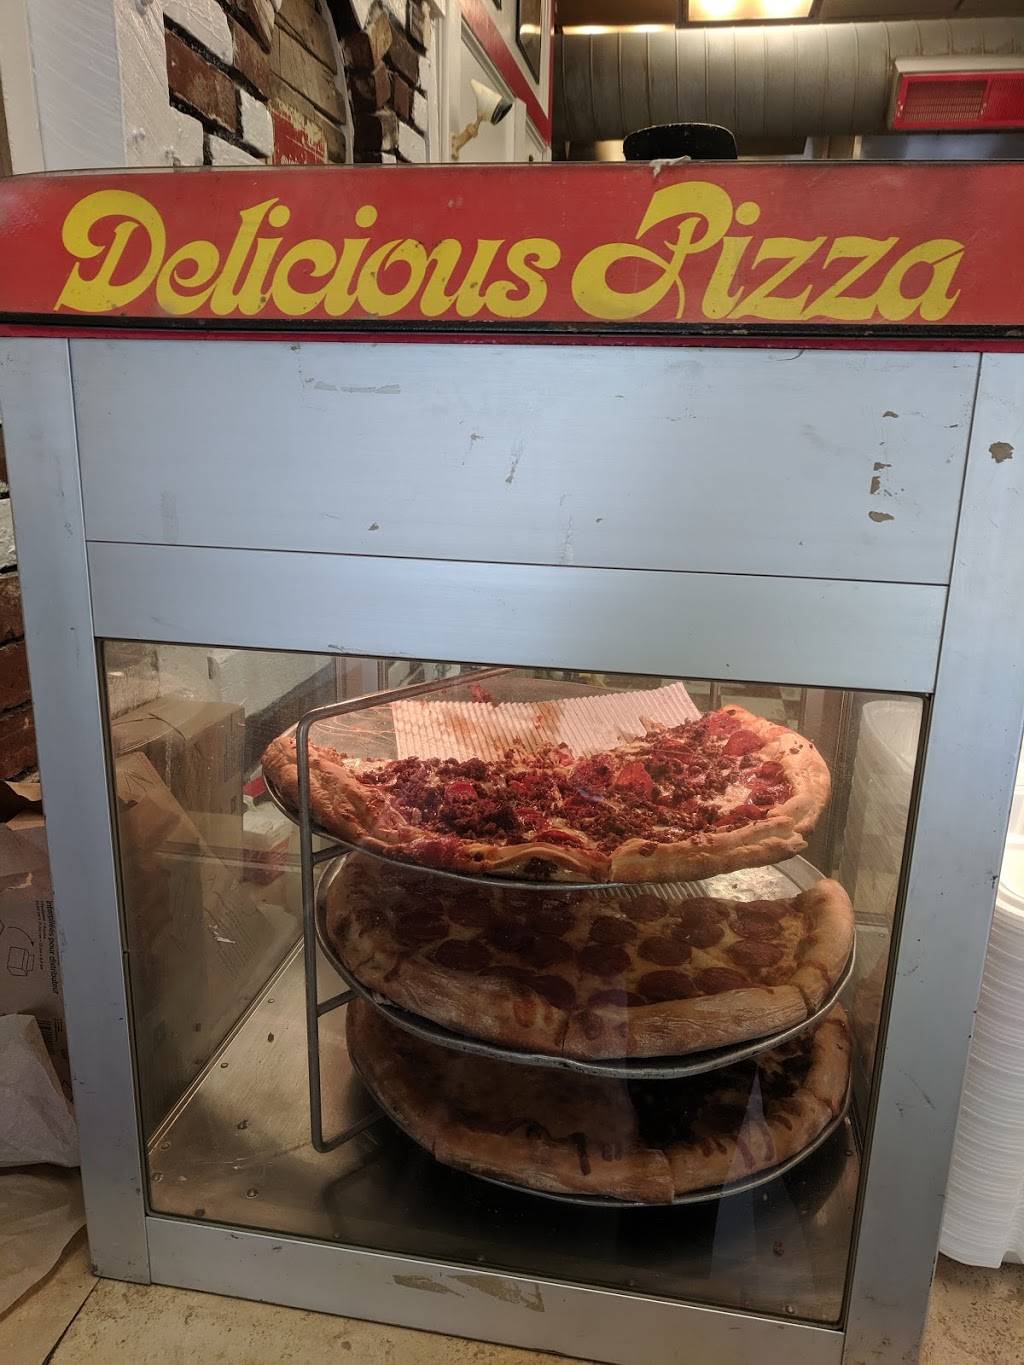 Doughboys Pizza | Photo 4 of 20 | Address: 508 Island Ave, McKees Rocks, PA 15136, USA | Phone: (412) 771-1030